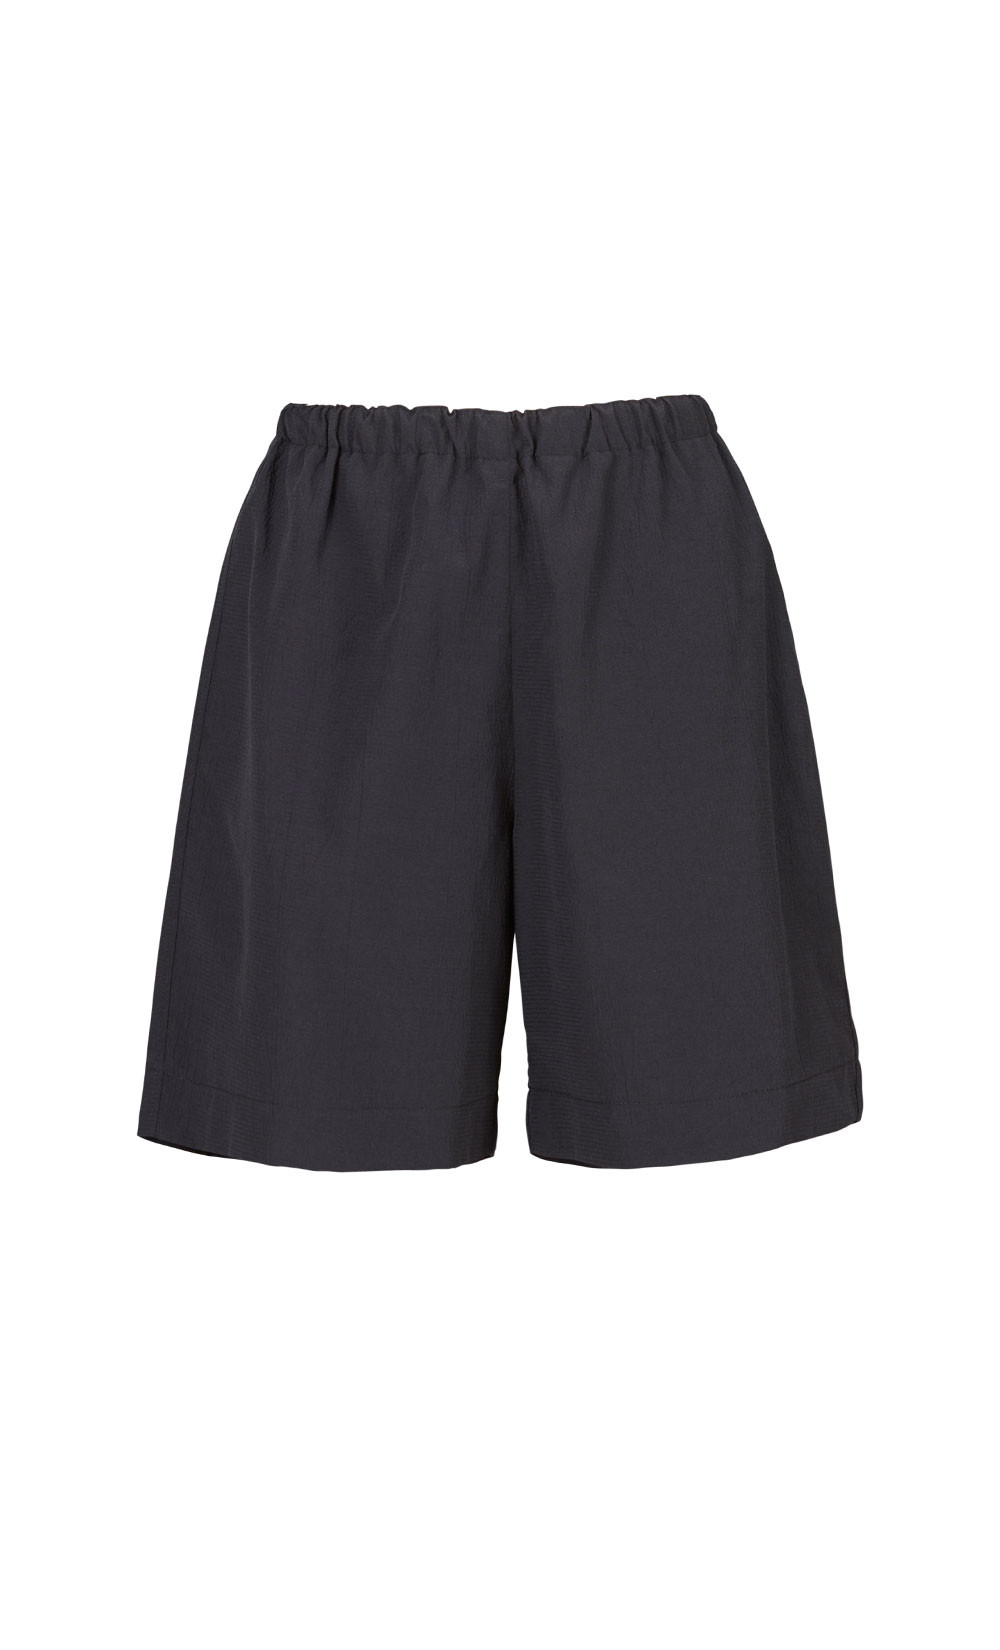 Port Shorts